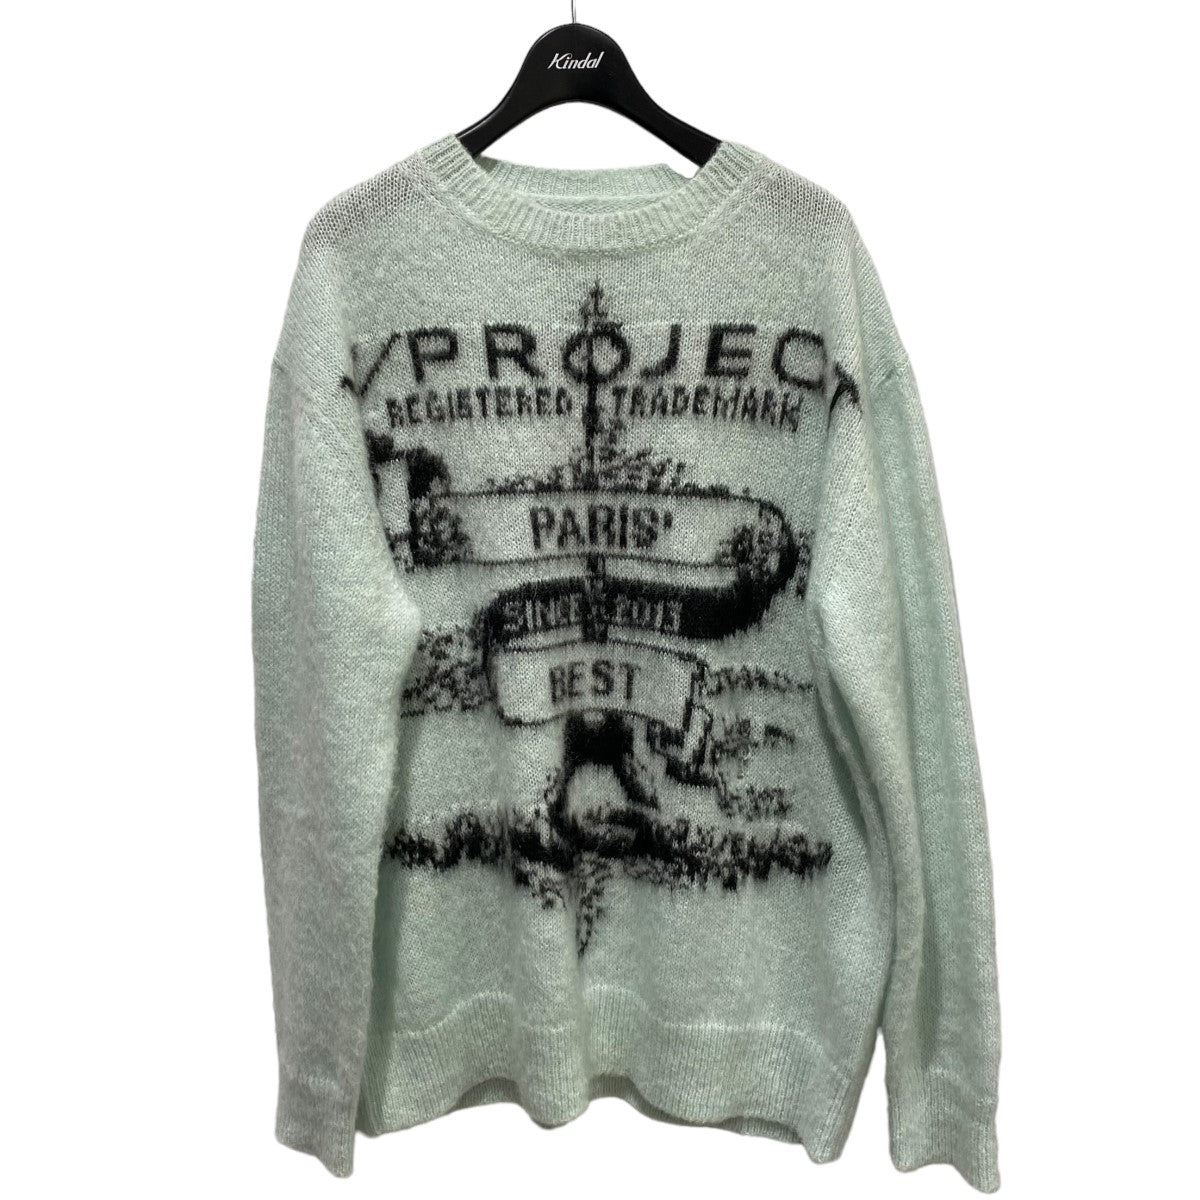 Y PROJECT(ワイプロジェクト) Paris Best Jacquard Sweater モヘア混 ...